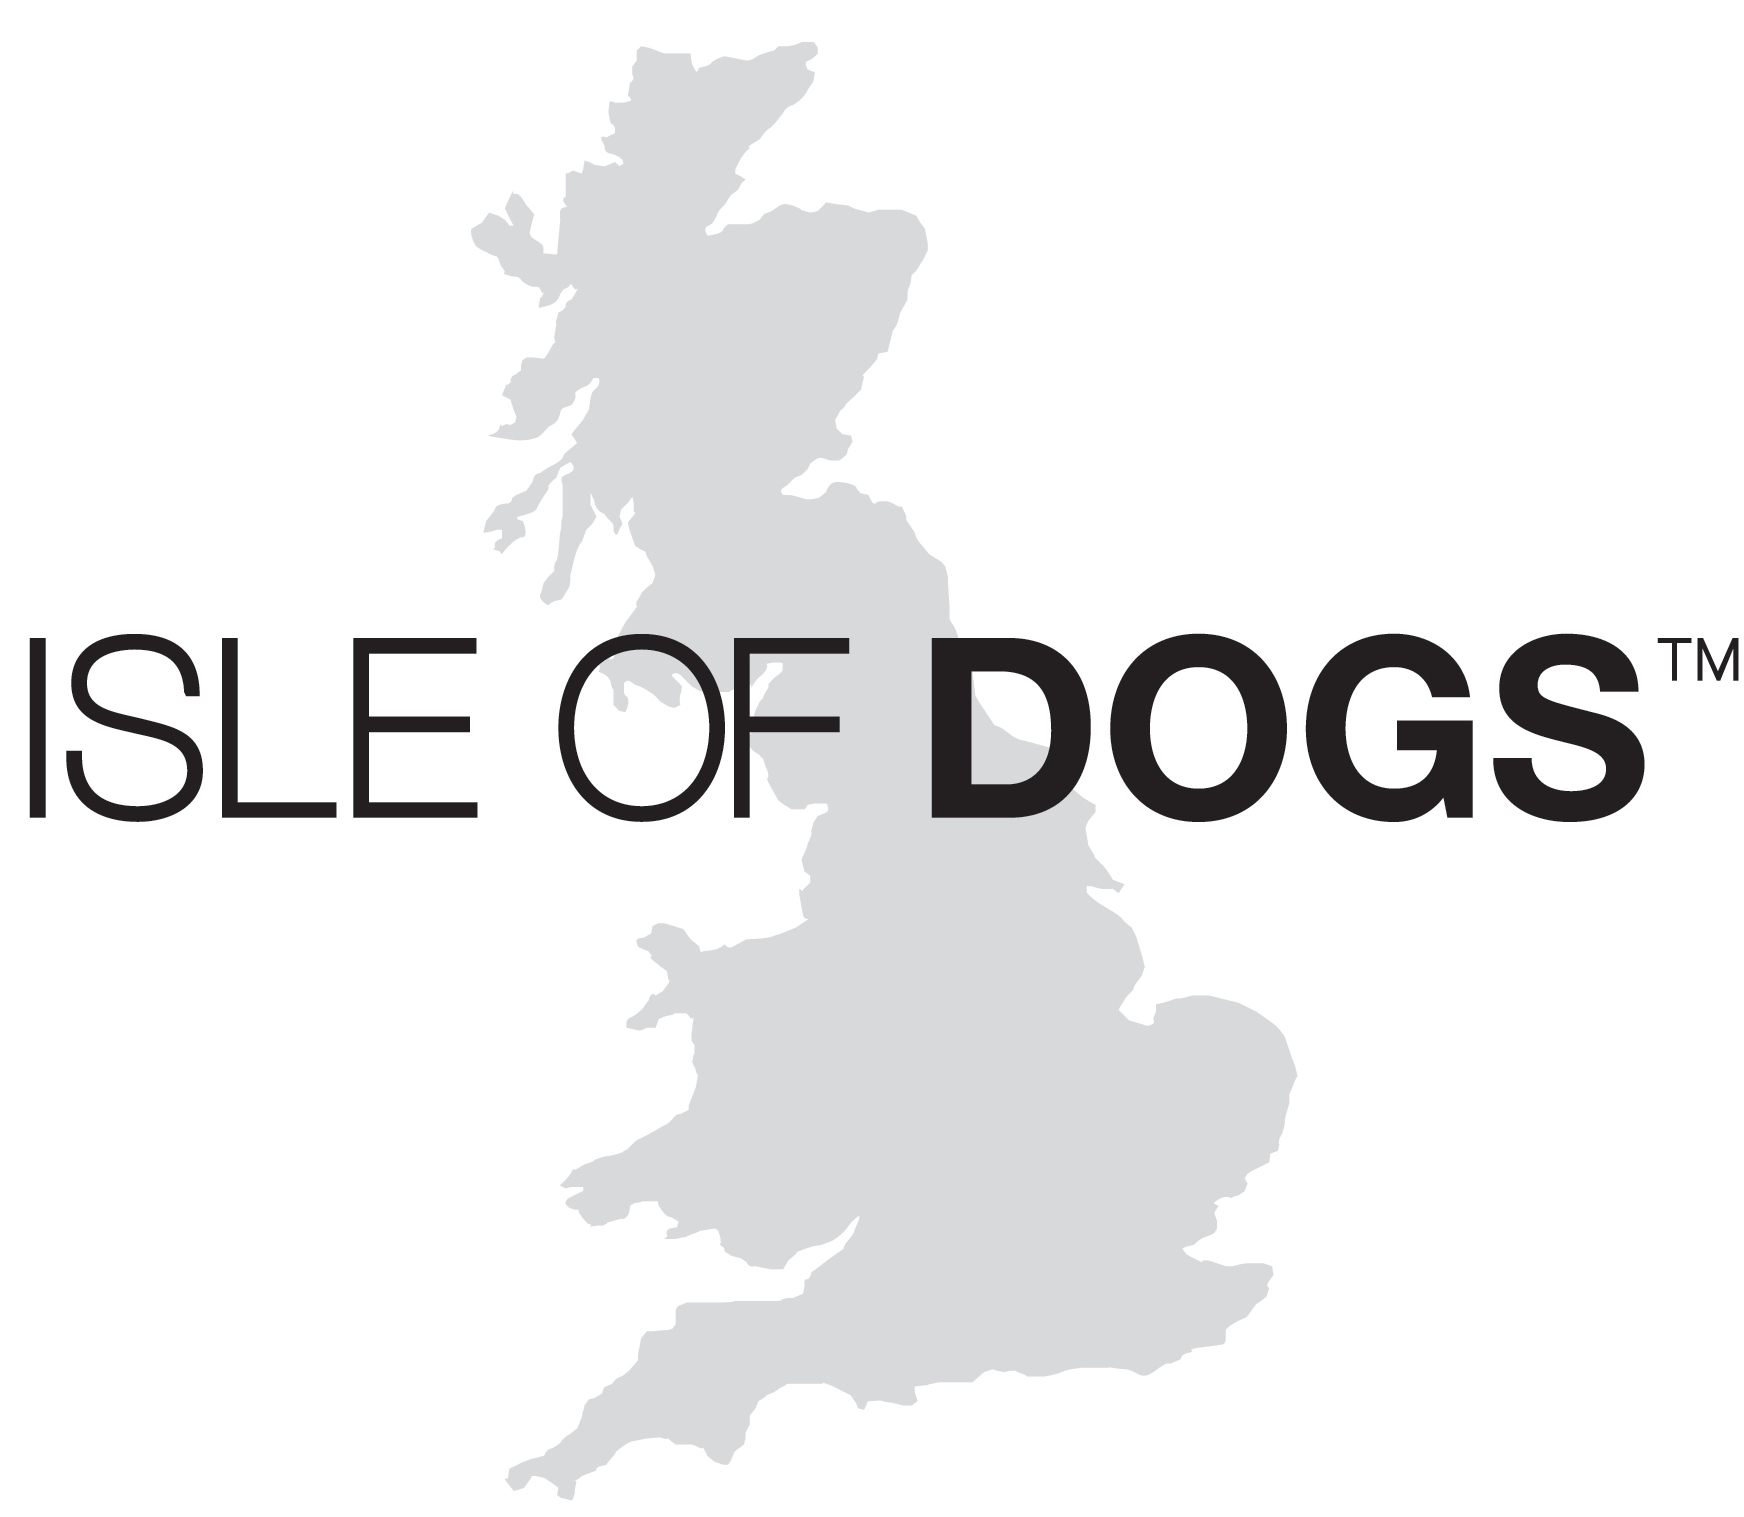 Isle of dogs 爱犬岛 logo